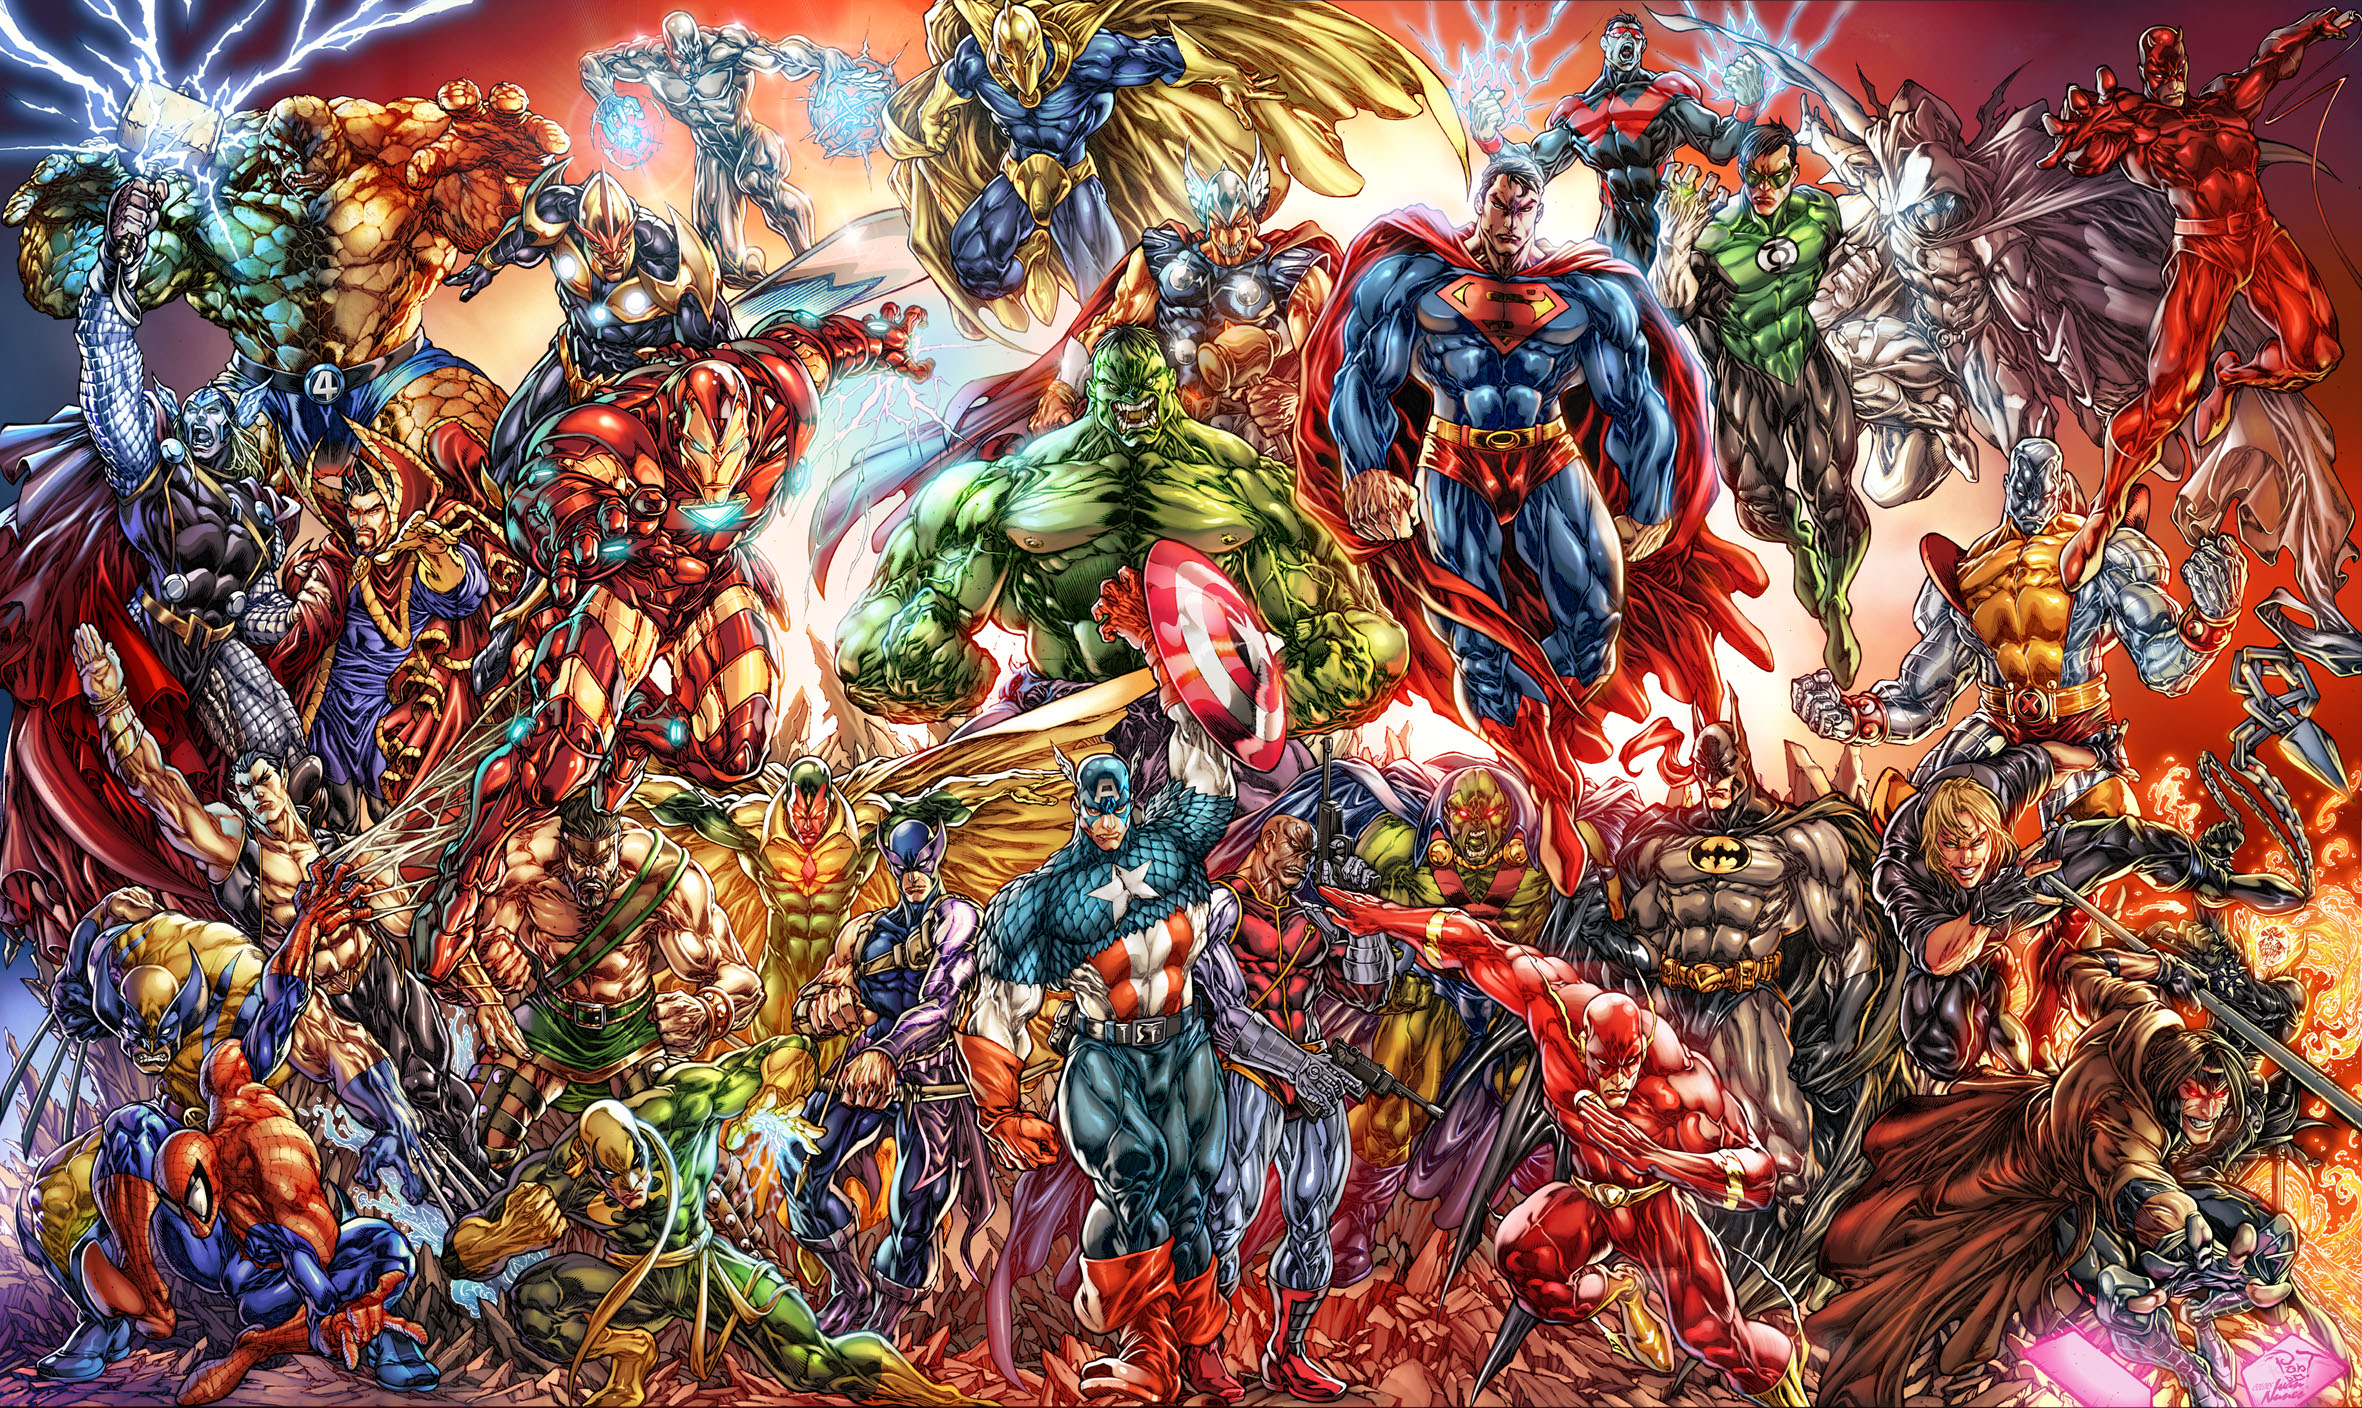 hal jordan, superman, martian manhunter, batman, spider man, daredevil, dc comics, hulk, comics, collage, barry allen, wolverine, ghost rider, ben grimm, beta ray bill, captain america, clint barton, colossus, danny rand, deathlok, doctor fate (dc comics), doctor strange, flash, gambit (marvel comics), green lantern, hawkeye, hercules (marvel comics), iron fist (marvel comics), iron man, j'onn j'onzz, longshot (marvel comics), moon knight, namor the sub mariner, nightwing, nova (marvel comics), peter parker, silver surfer, sub mariner, thing (marvel comics), thor, vision (marvel comics), wonder man wallpaper for mobile